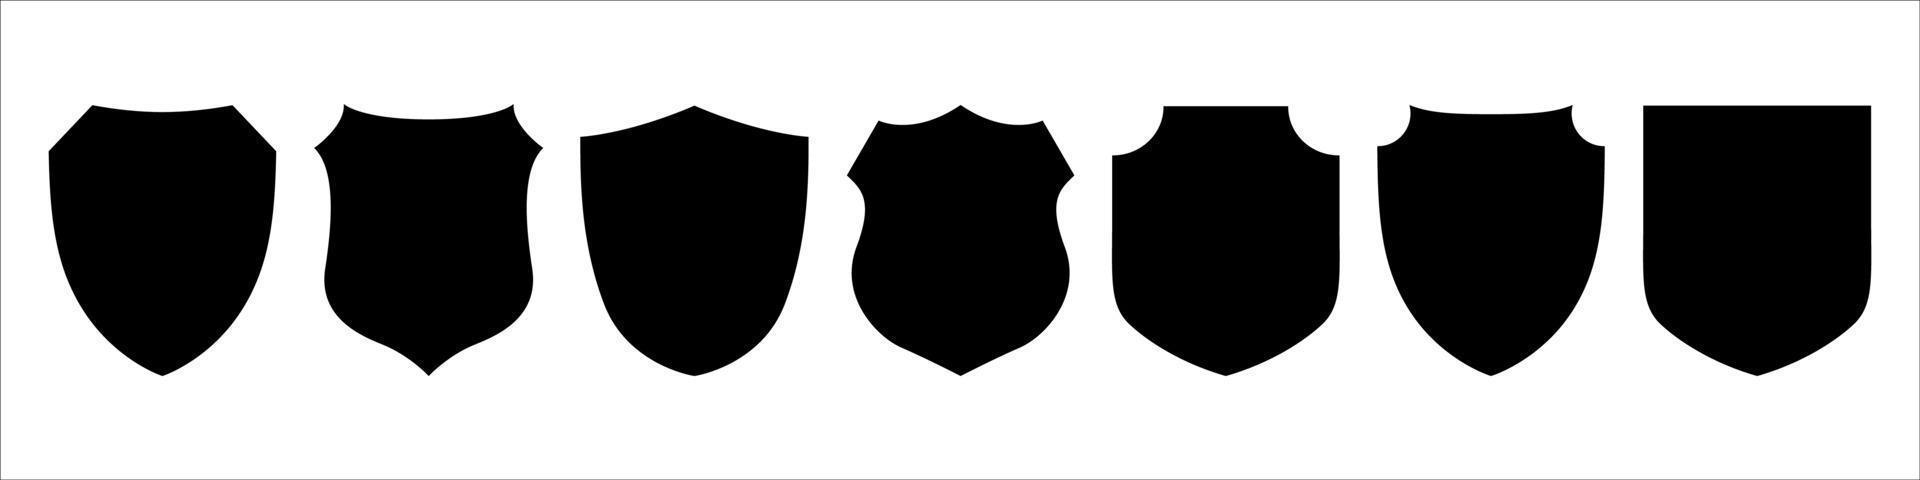 Shield icons set vector